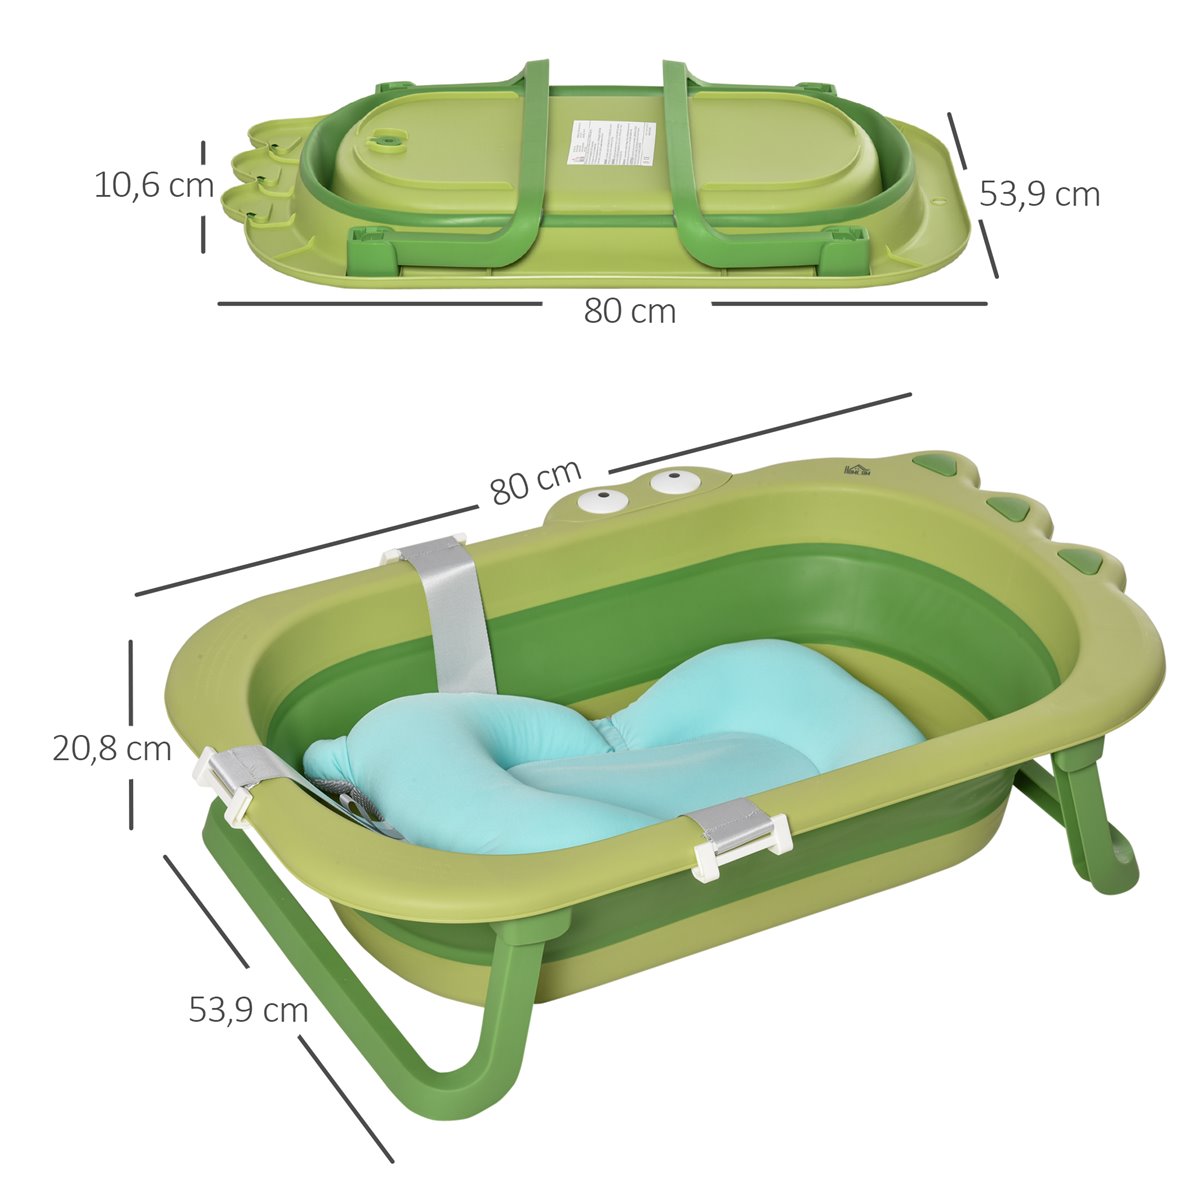 Banheira Portátil Dobrável Compacta para bebê - Mommy Bag